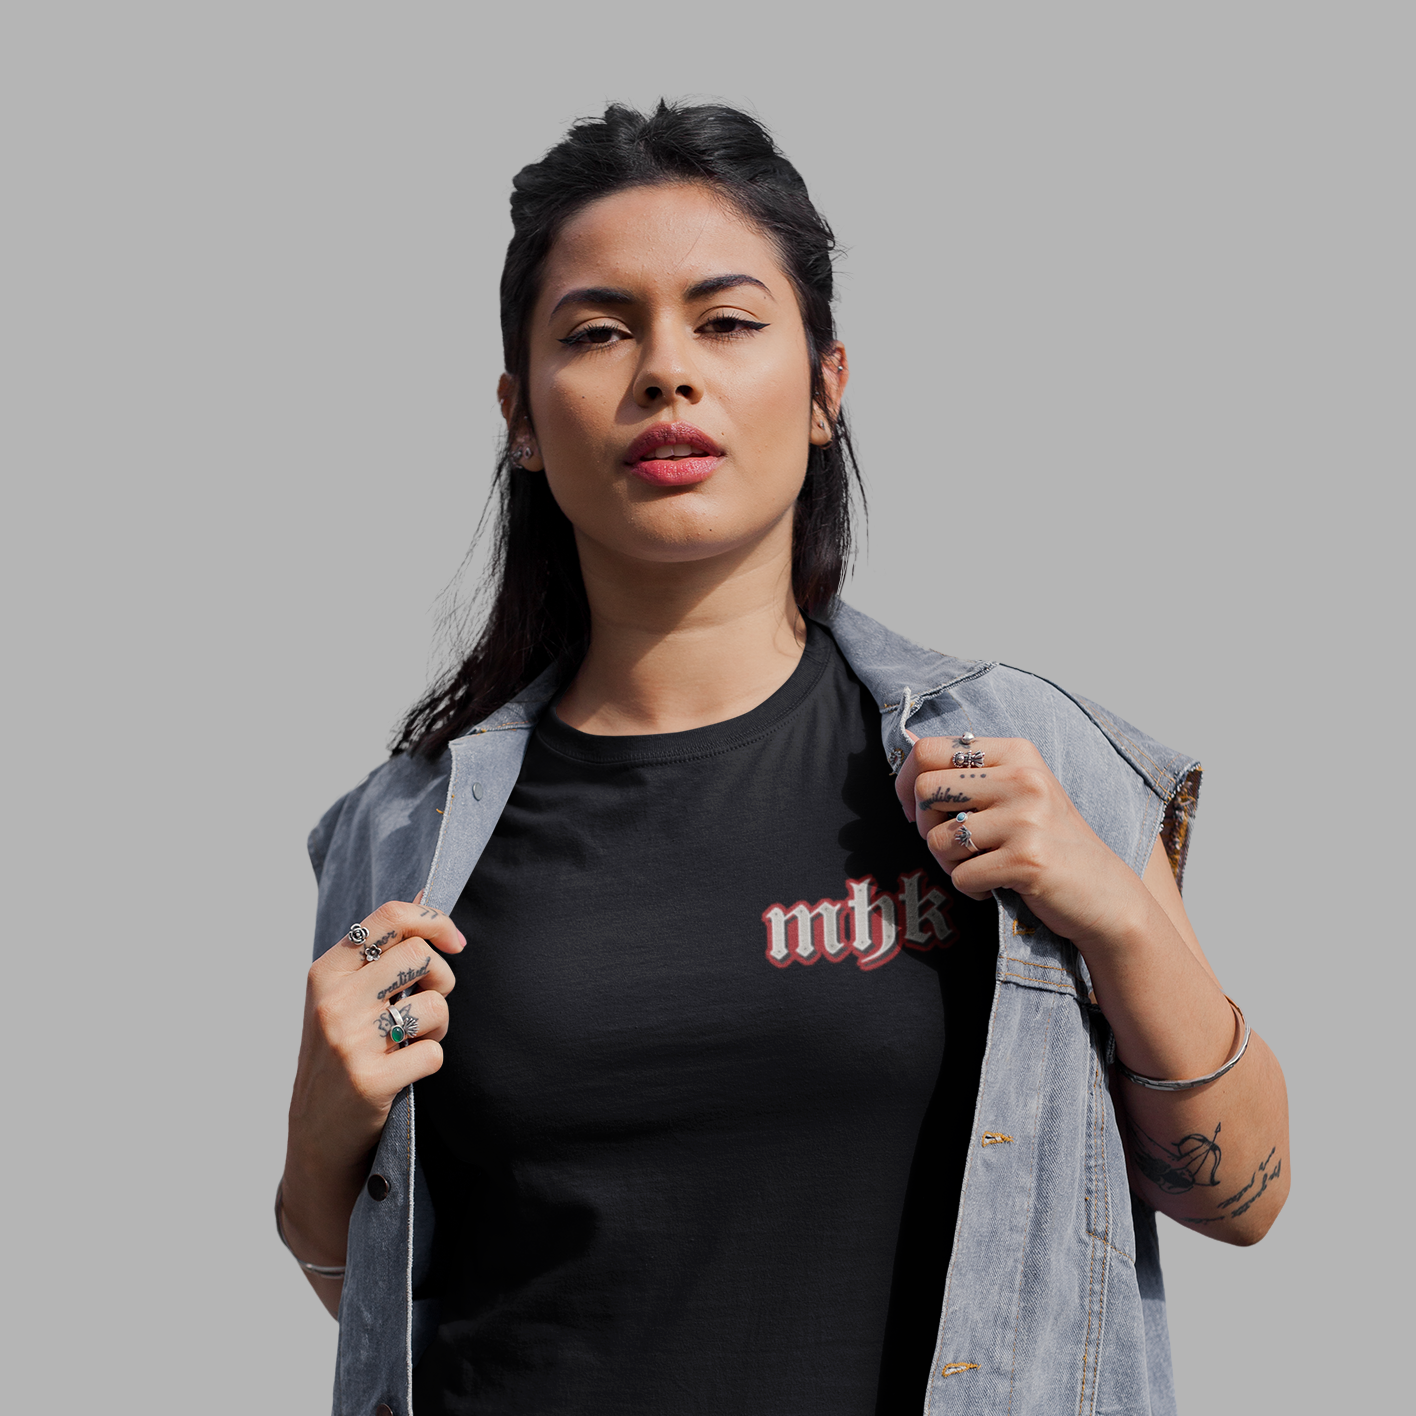 MHK Women's Front & Back Logos T-Shirt